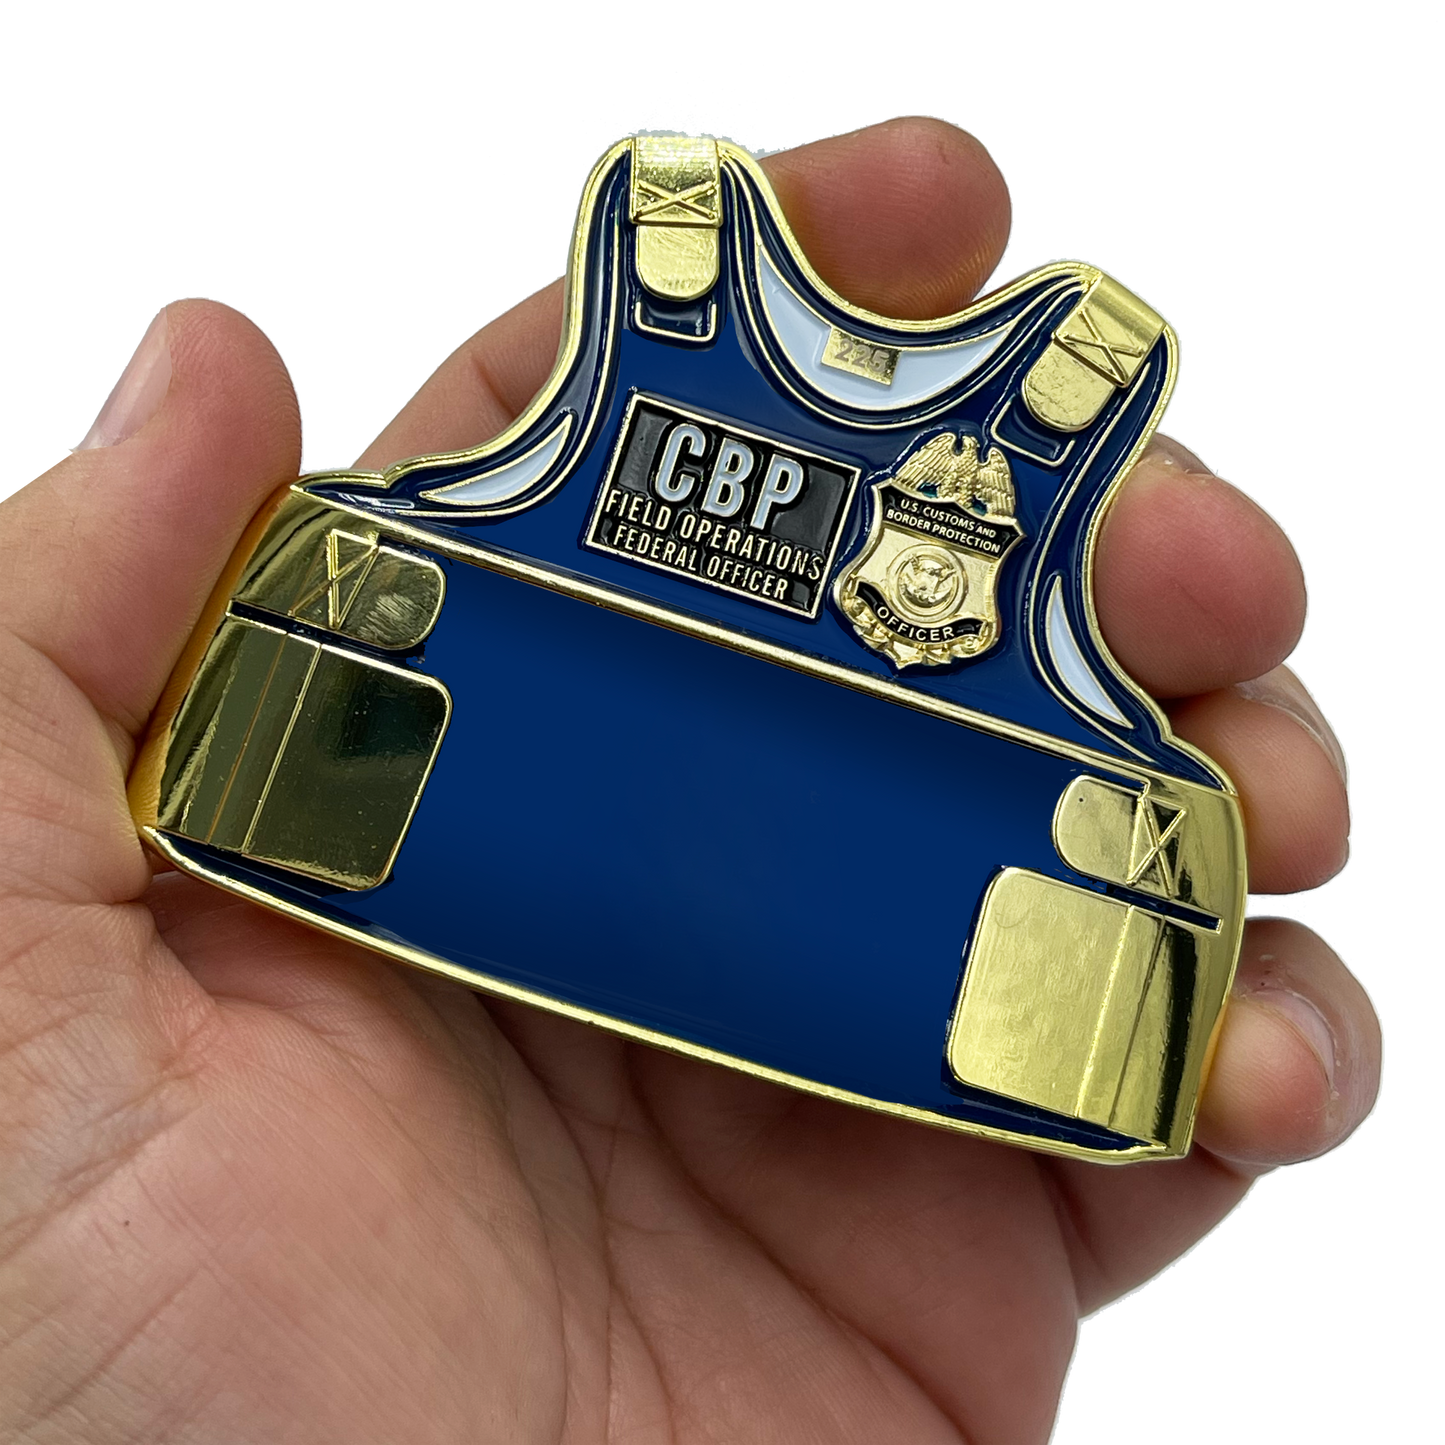 EL6-007 Field Ops CBP Officer CBPO Fild Ops Body Armor 3D Challenge Coin